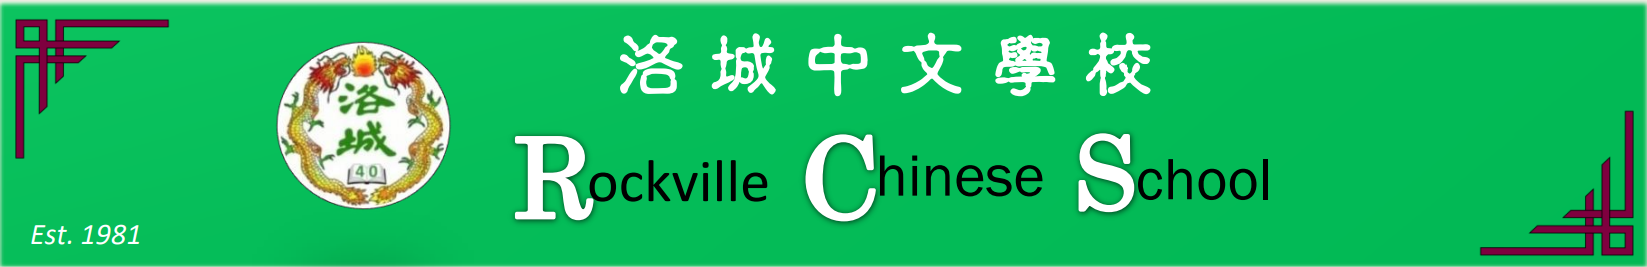 Rockville Chinese School